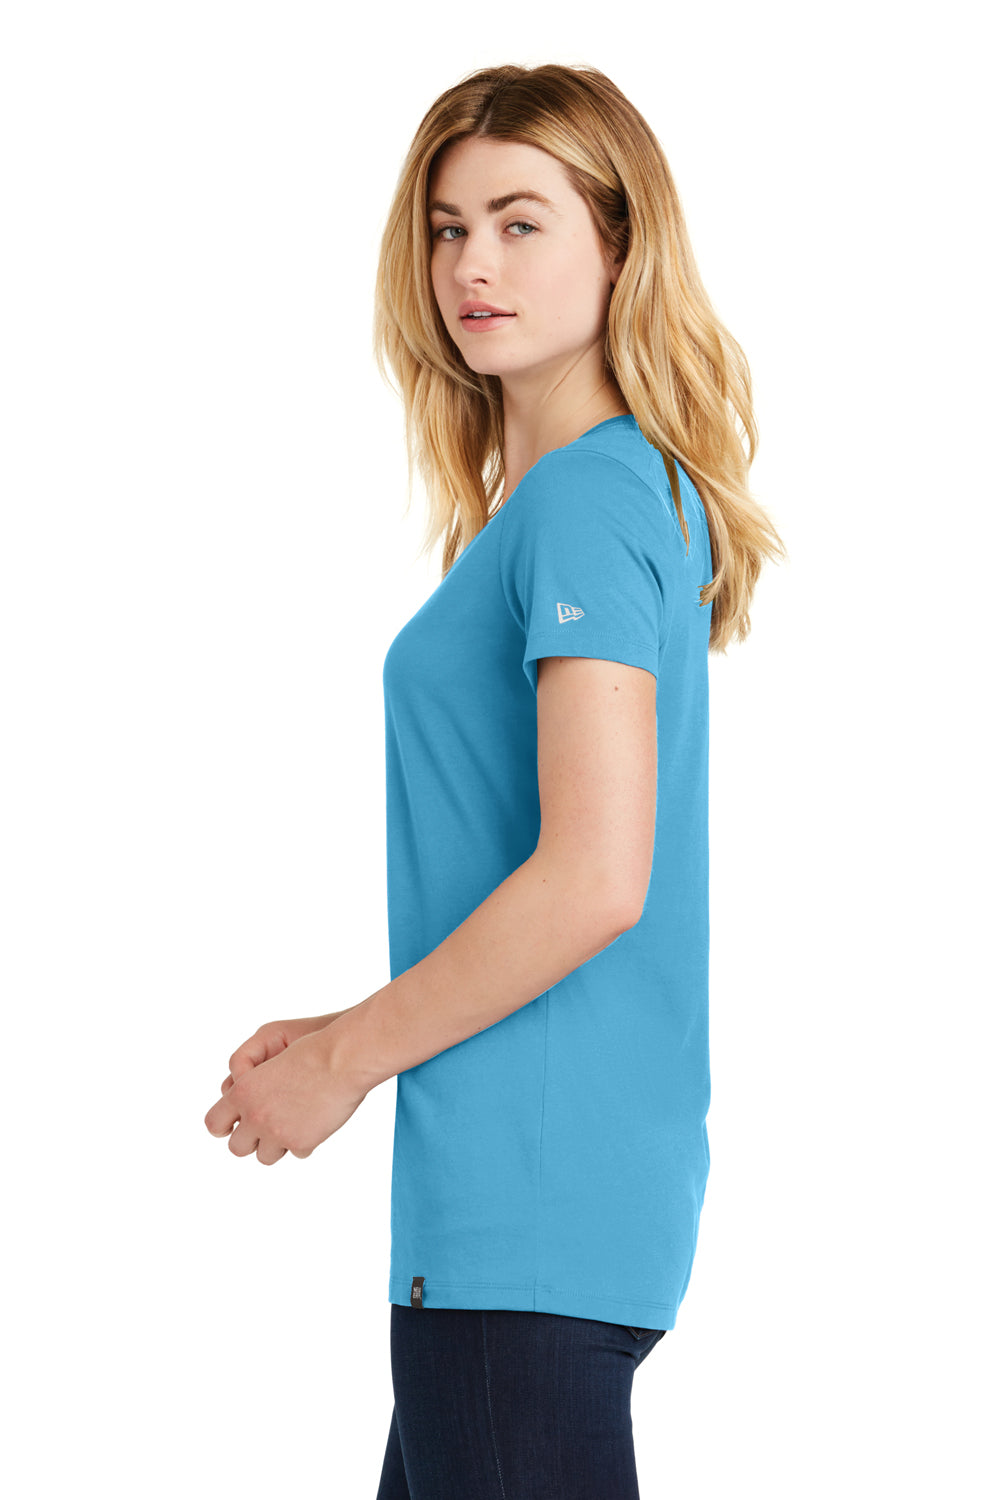 New Era LNEA101 Womens Heritage Short Sleeve V-Neck T-Shirt Sky Blue Side